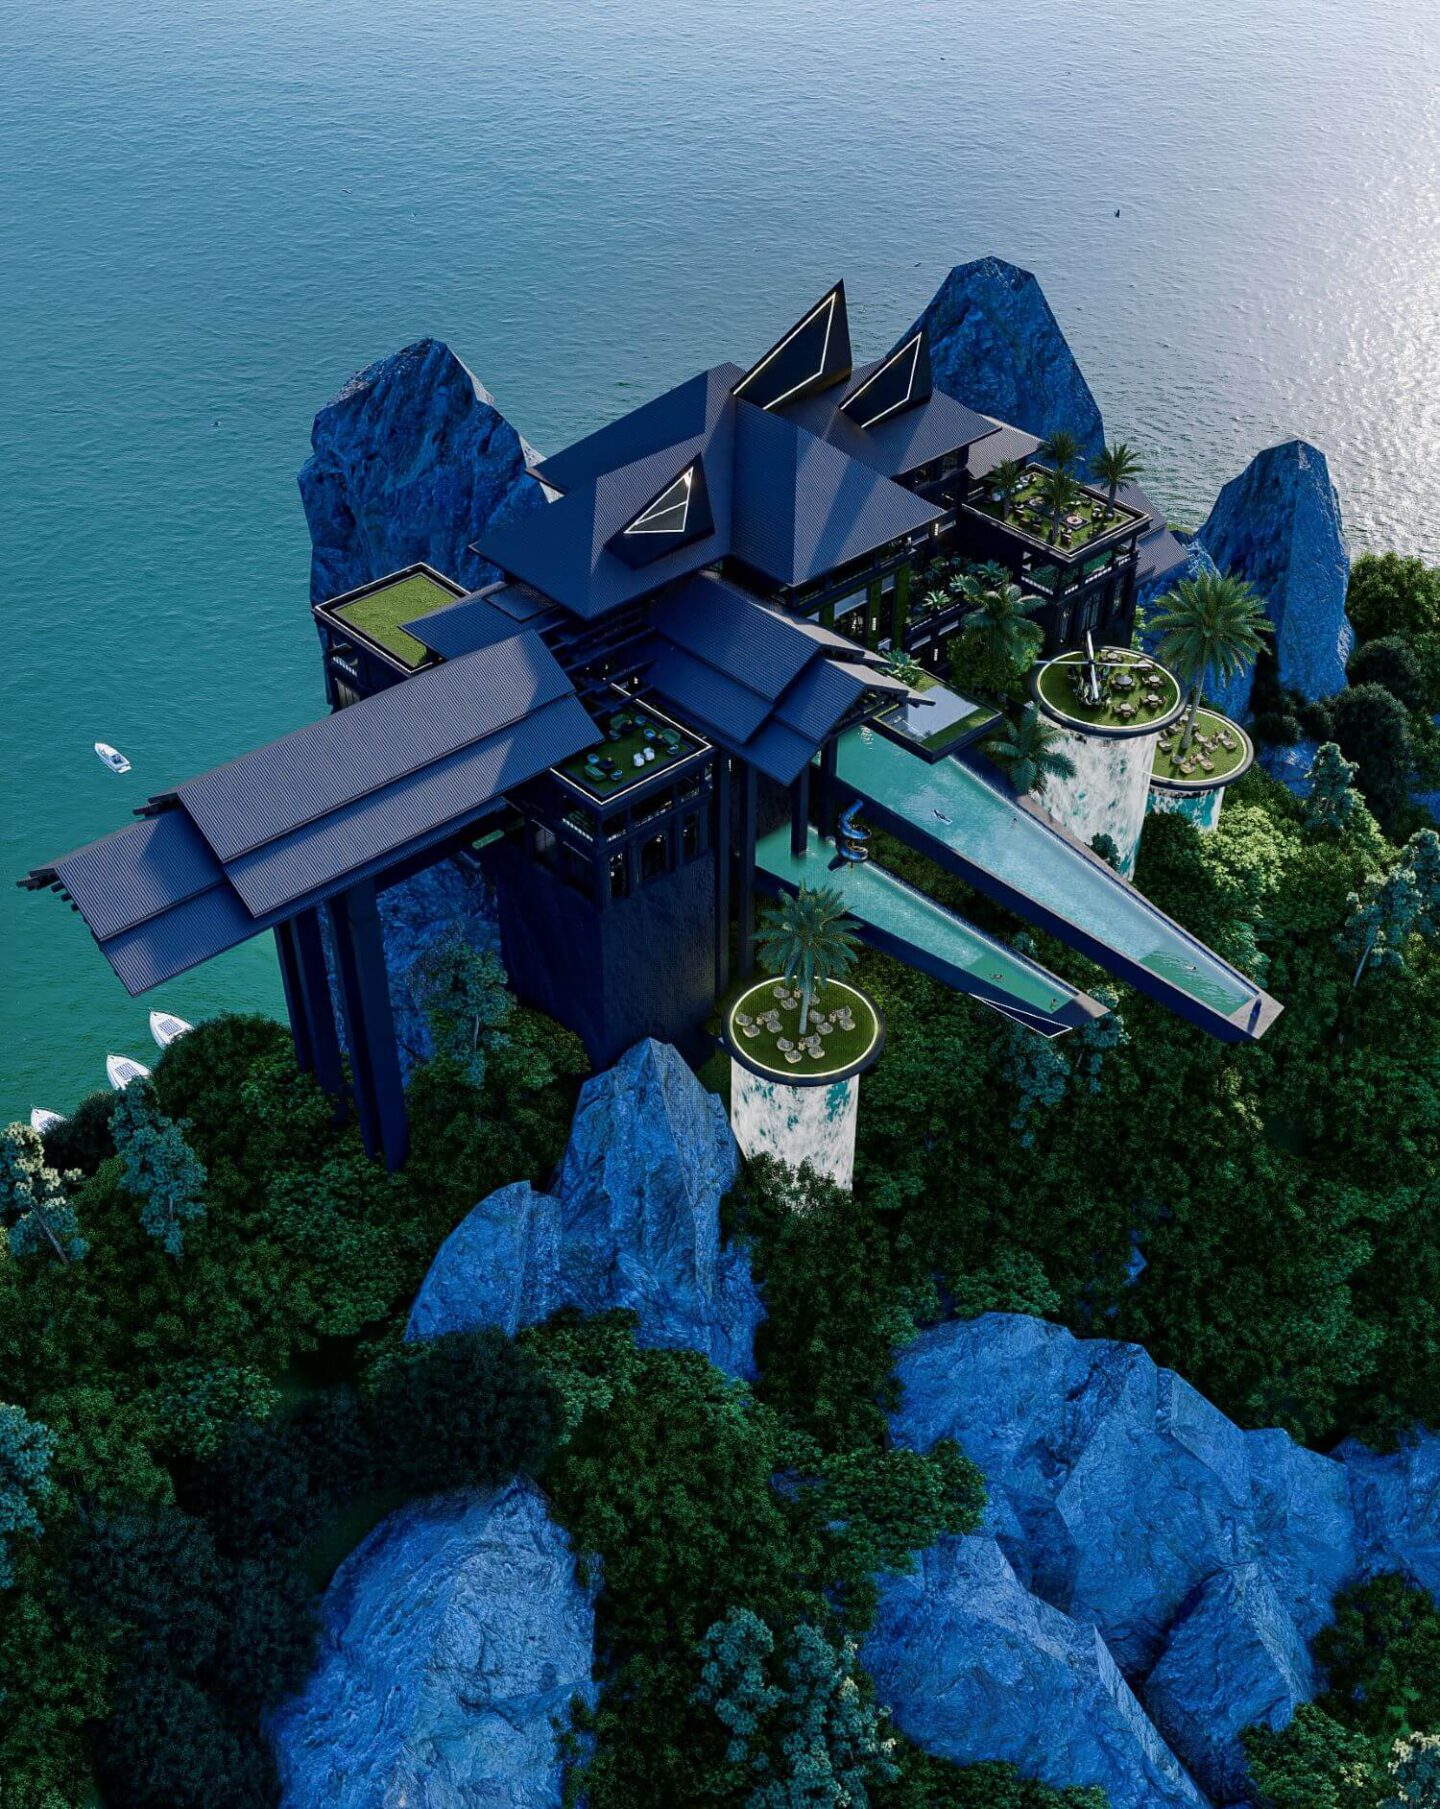 veliz arquitecto, mansion of the waters, metaverse design